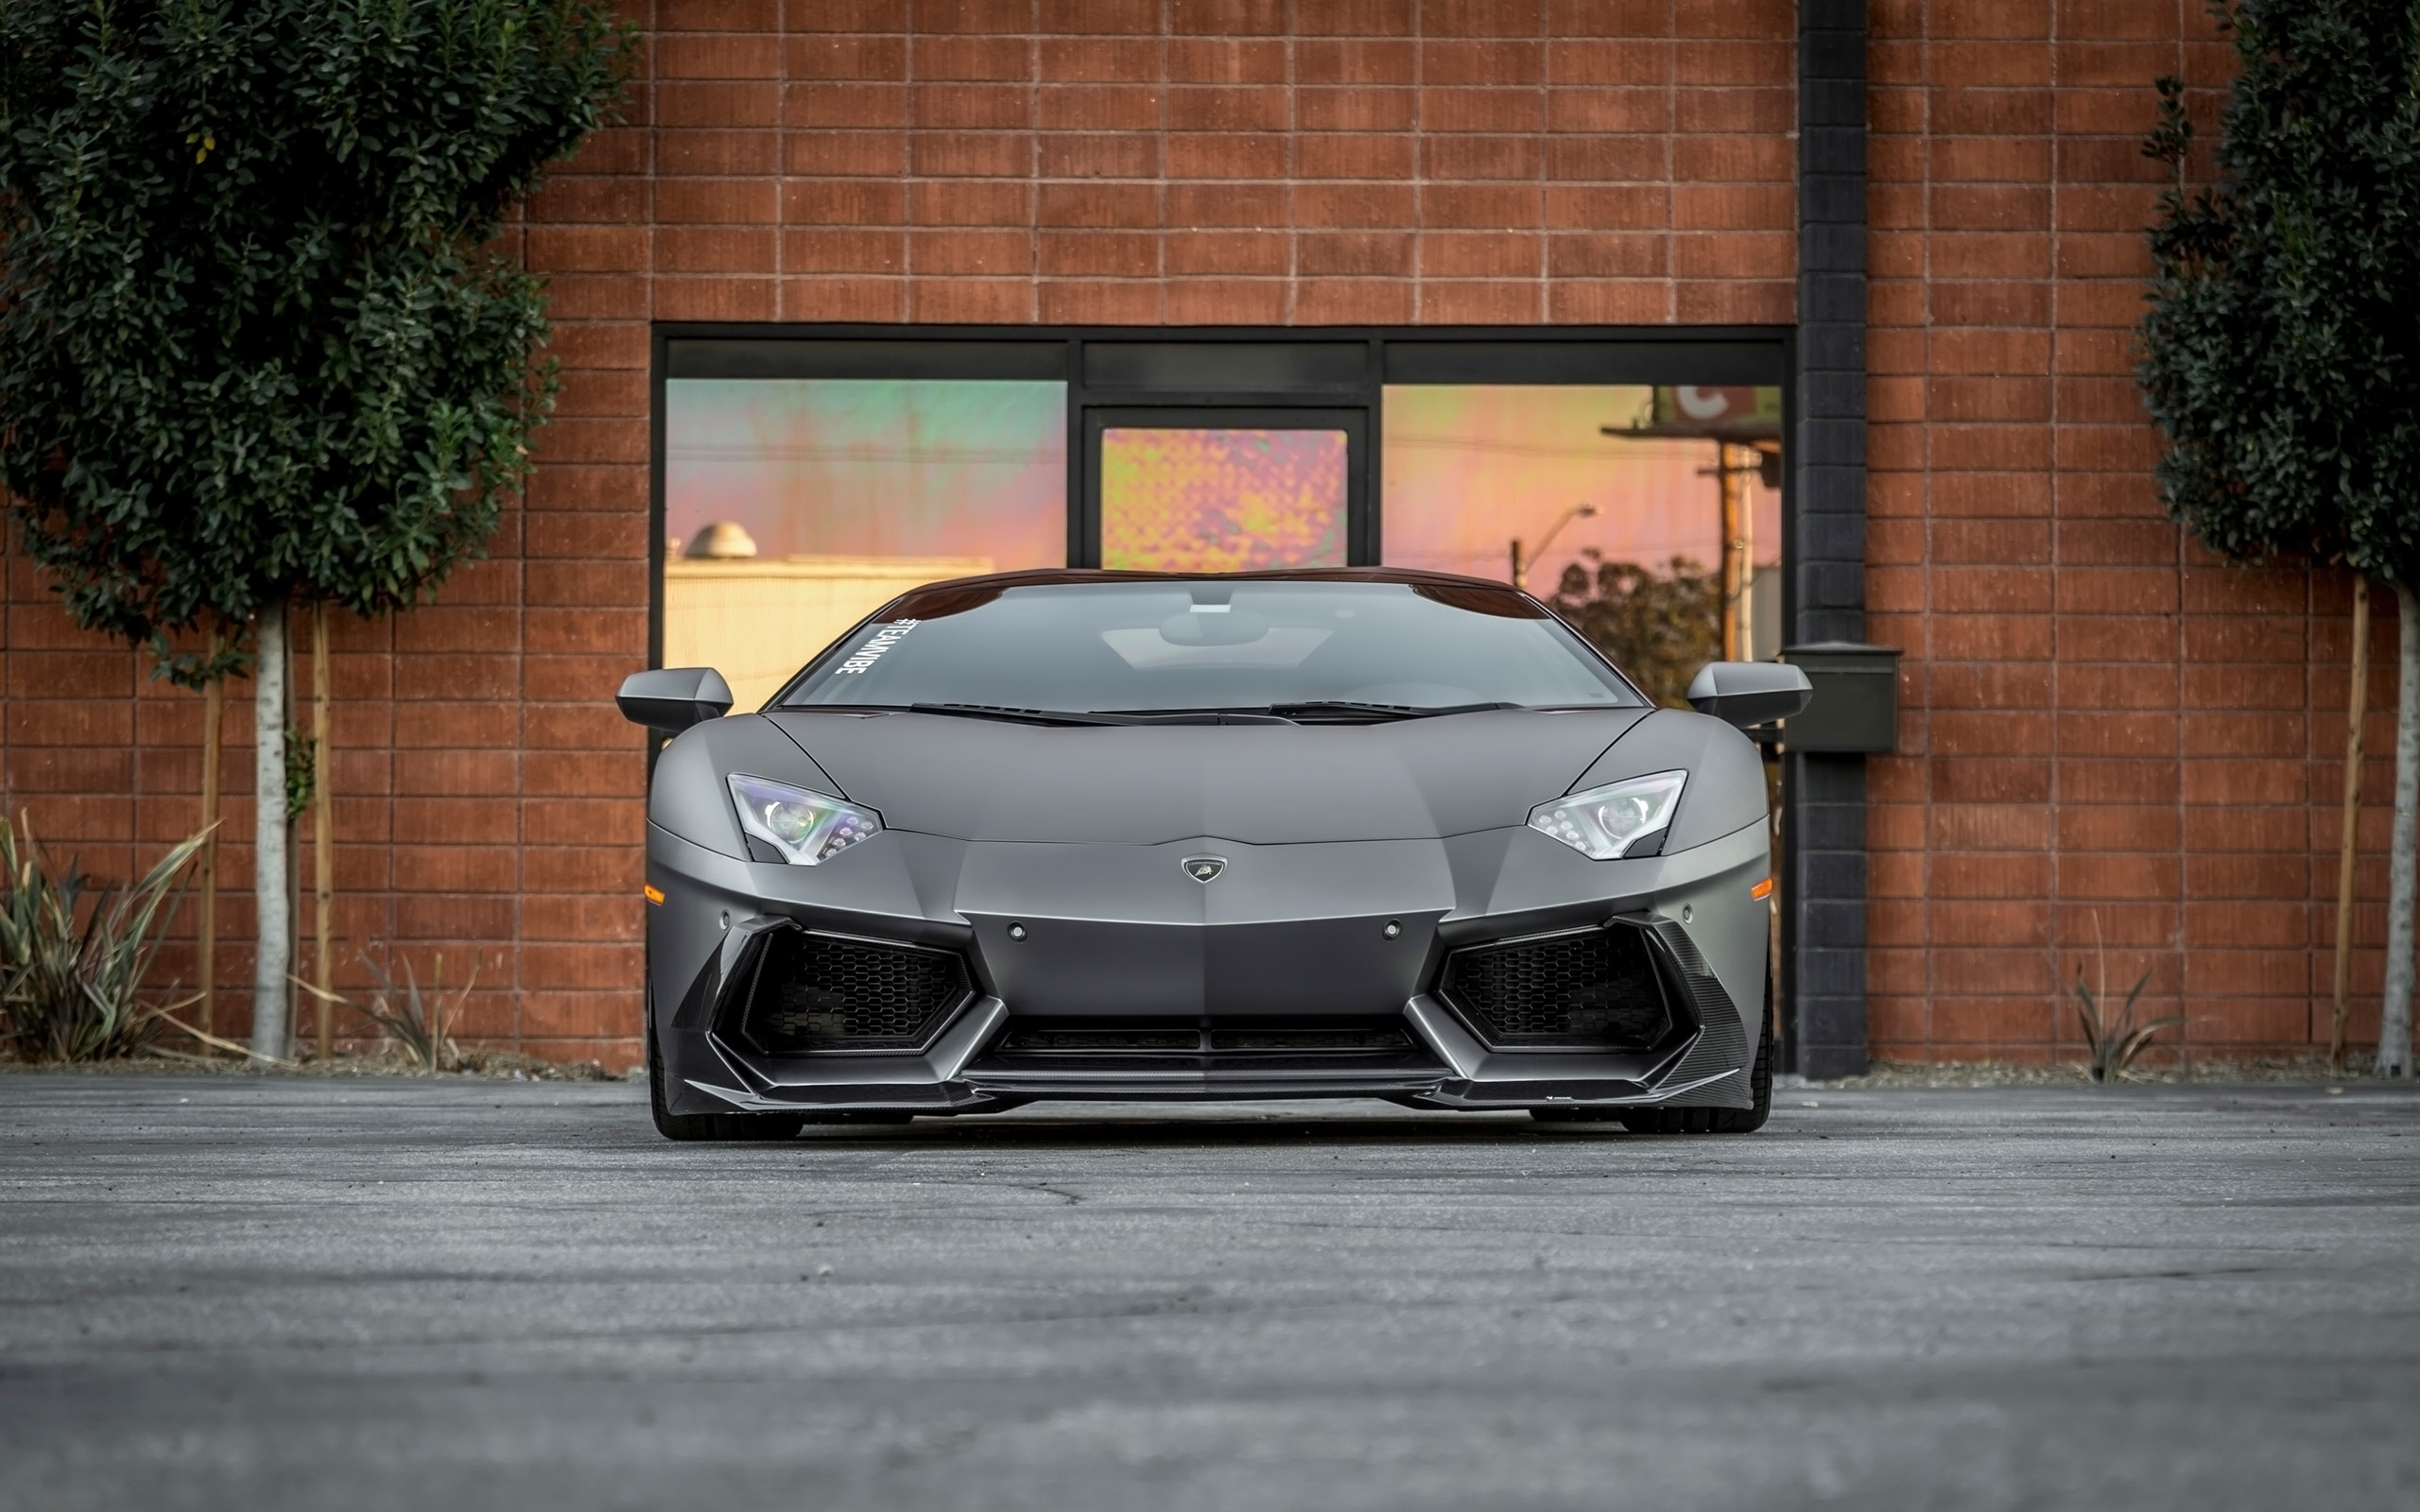 415654 Заставки и Обои Lamborghini Aventador Сарагоса Edizione на телефон. Скачать  картинки бесплатно